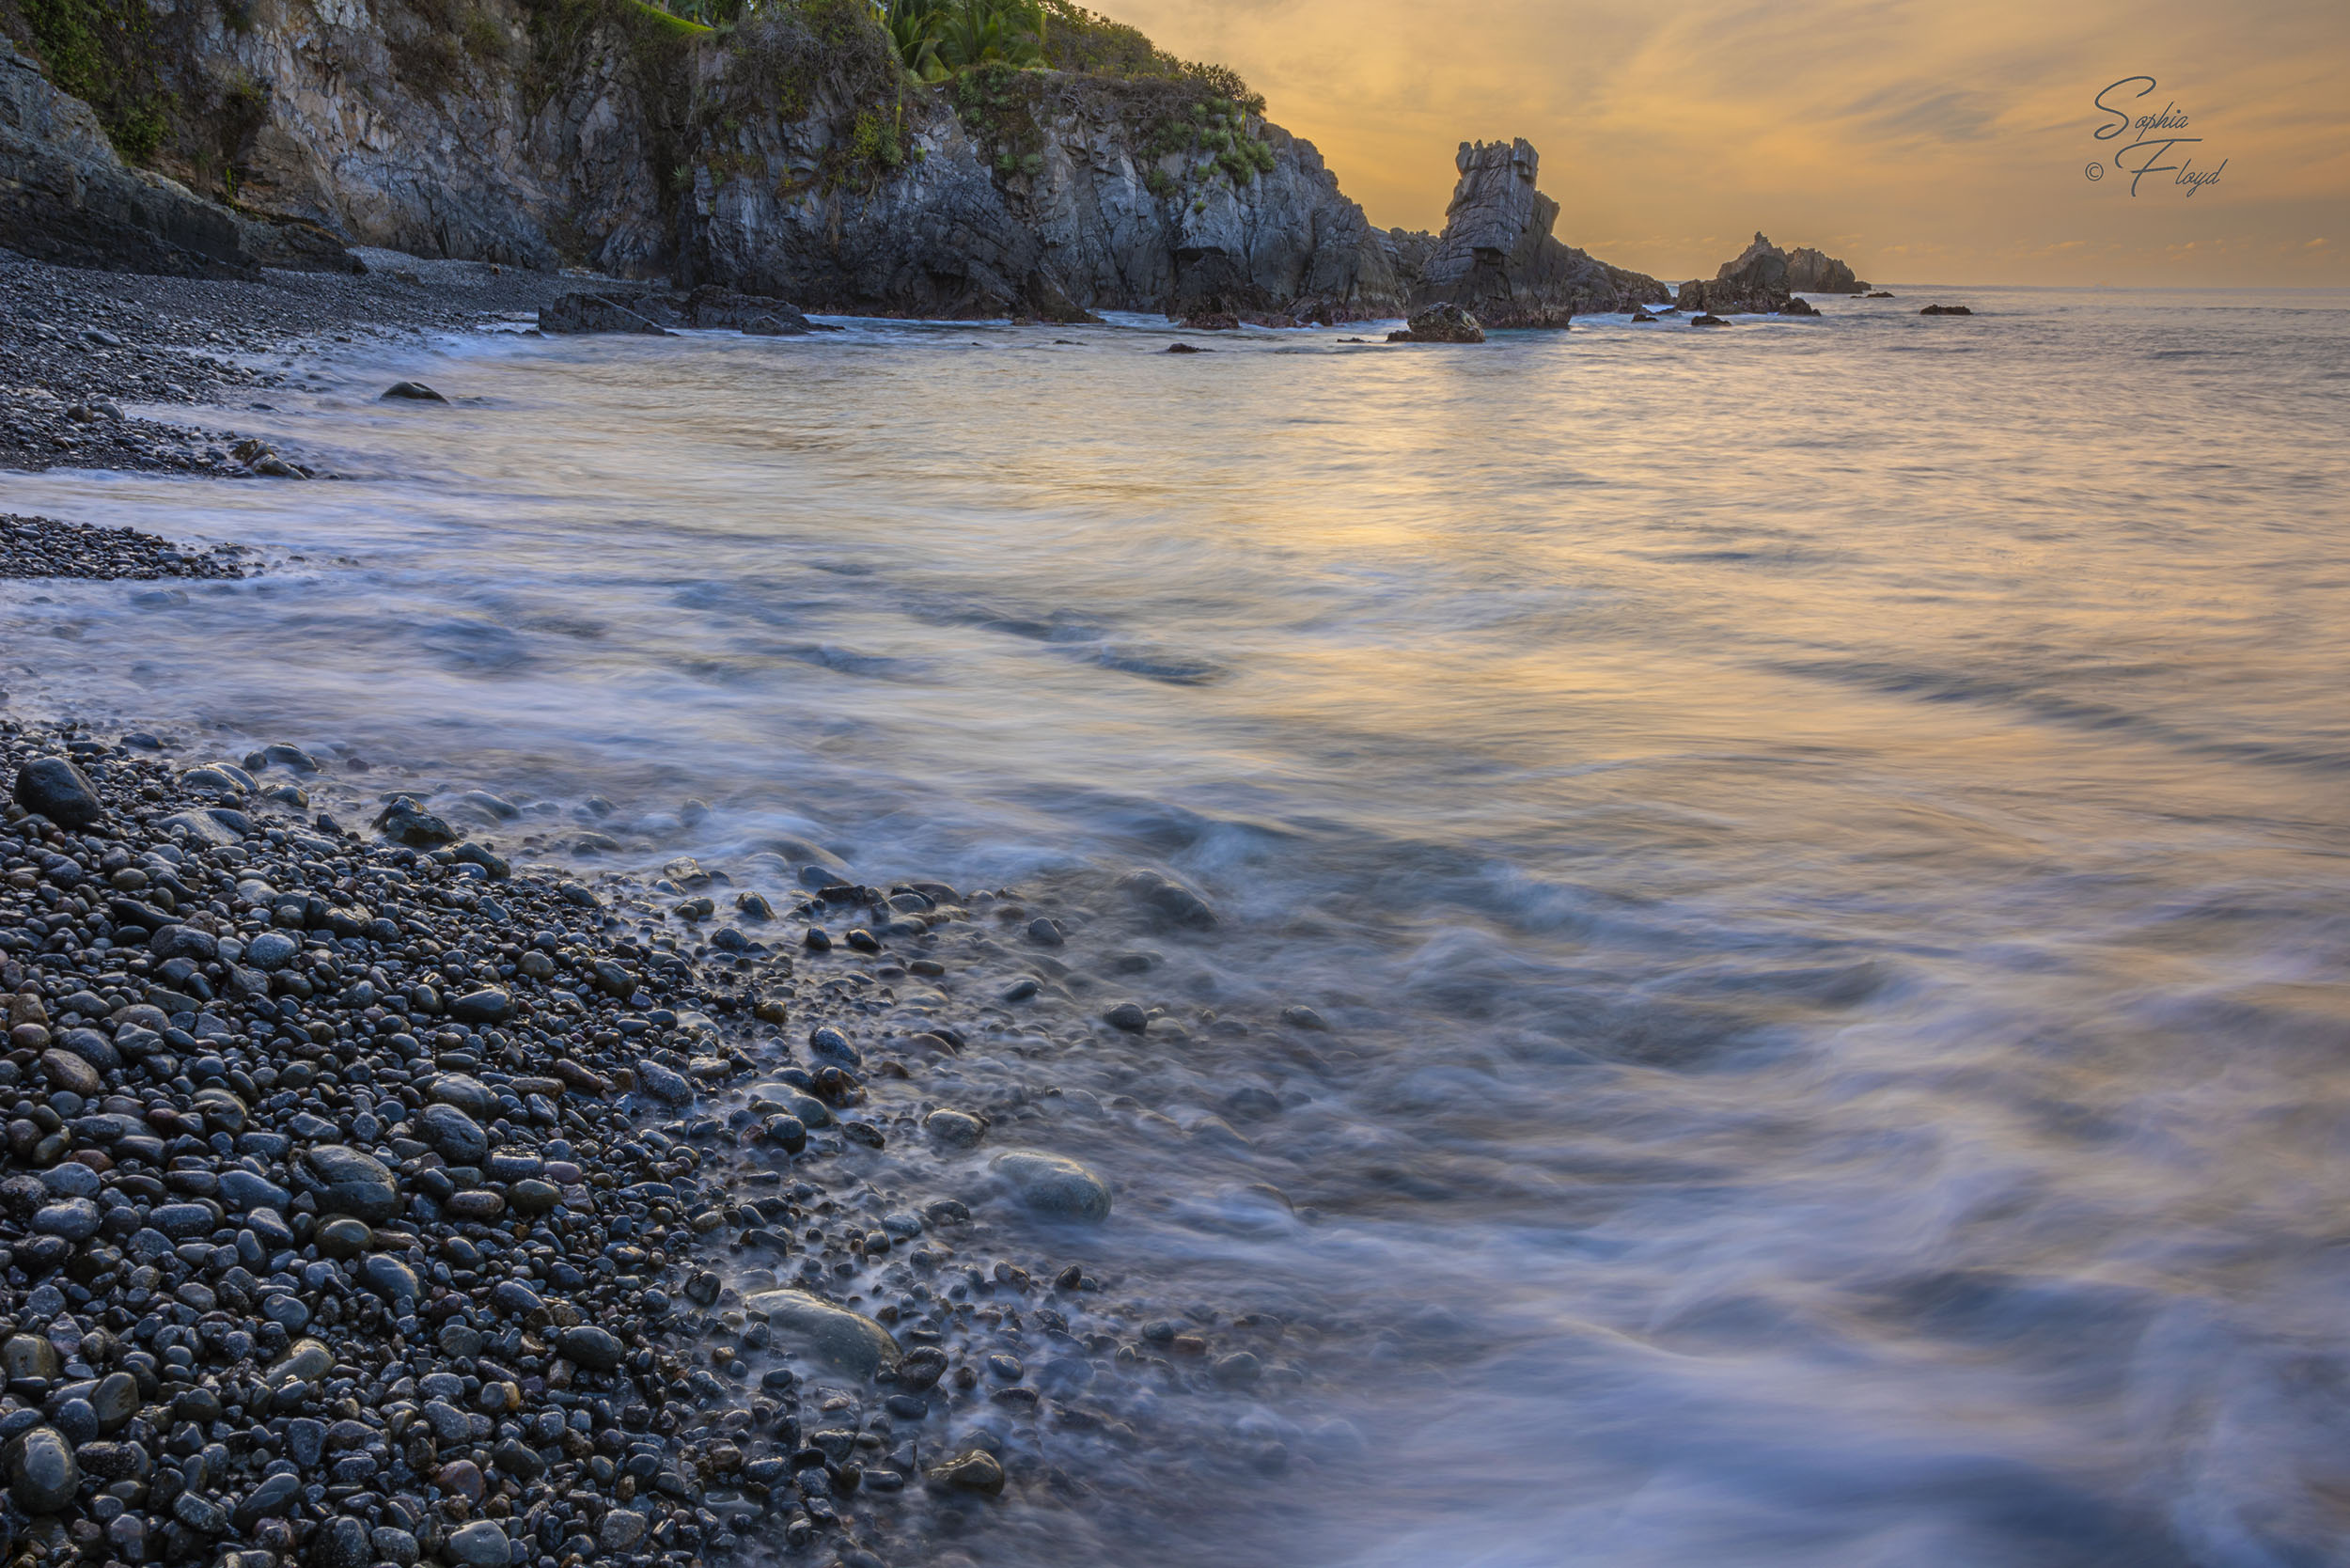 Landscape photographer Sophia Floyd depicts rocky shoreline in exquisite grace.